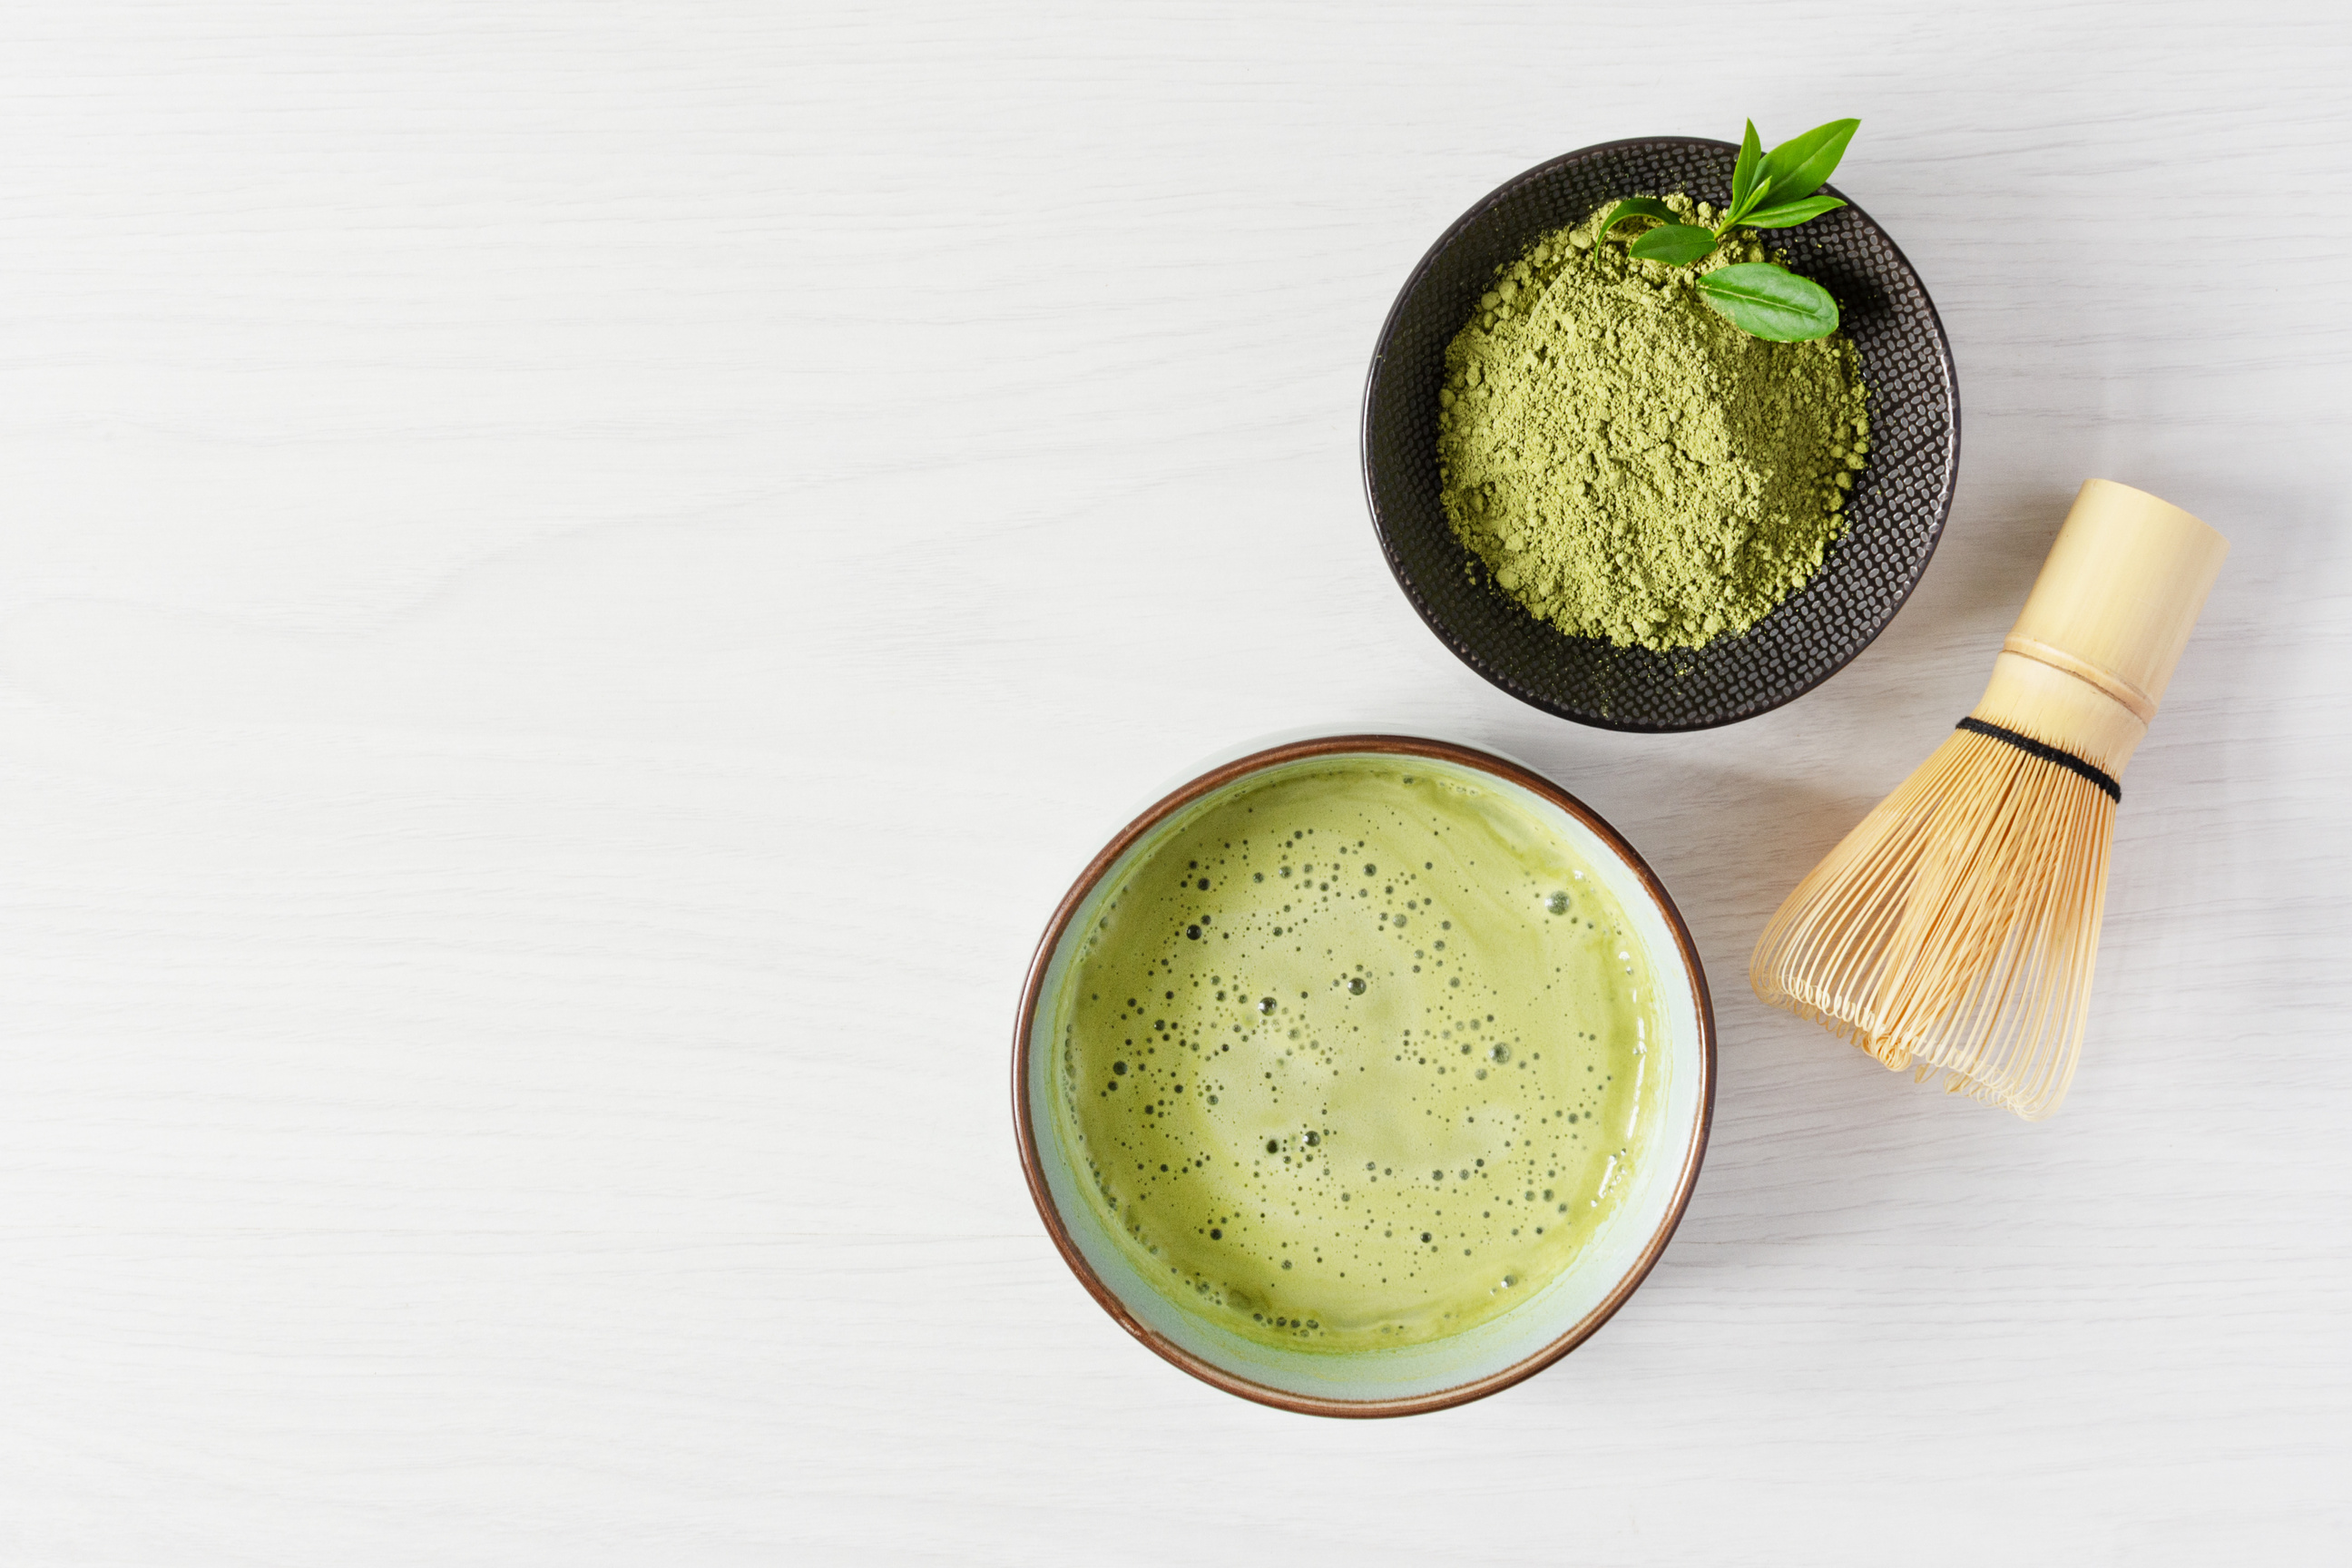 Organic green matcha tea. Matcha powder and matcha tea drink in a bowl.